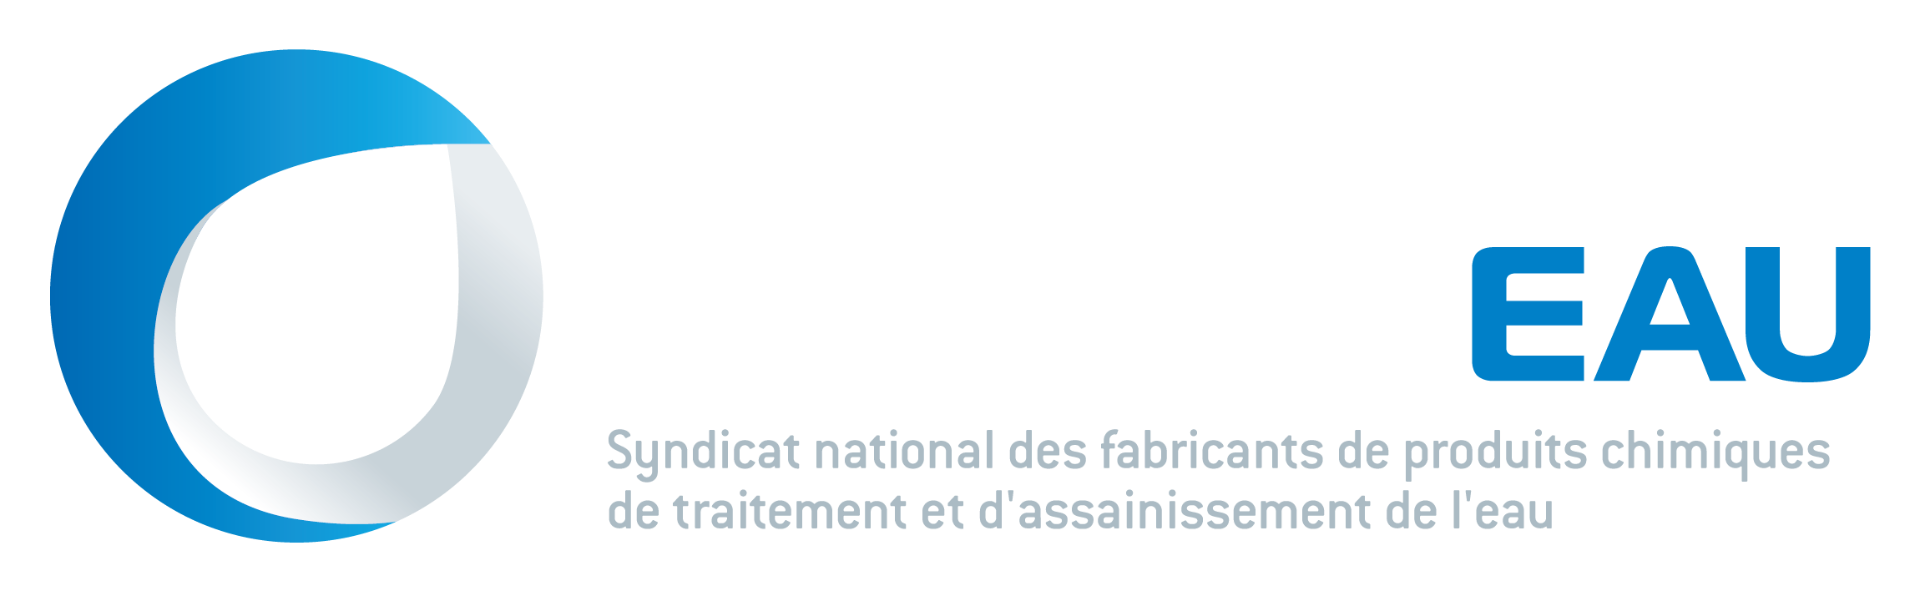 logo SYPRODEAU 2015 blanc a valider.png